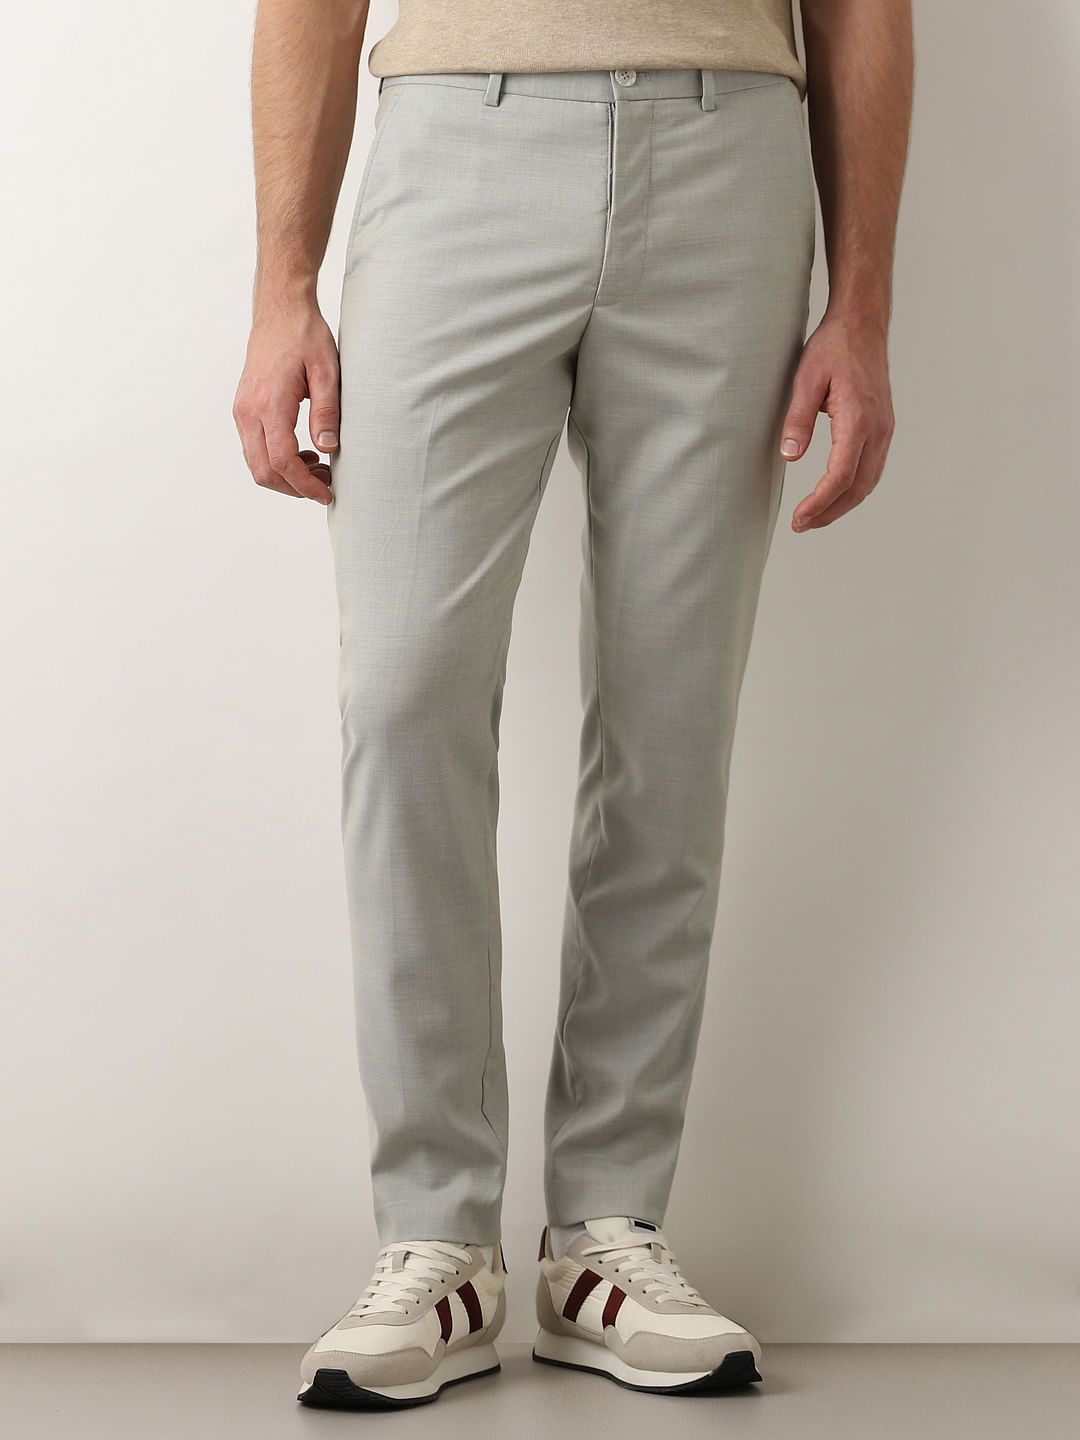 Mens Fall/Winter Slim Pants Woolen Skinny Suit Trousers Business Casual  Trousers | eBay